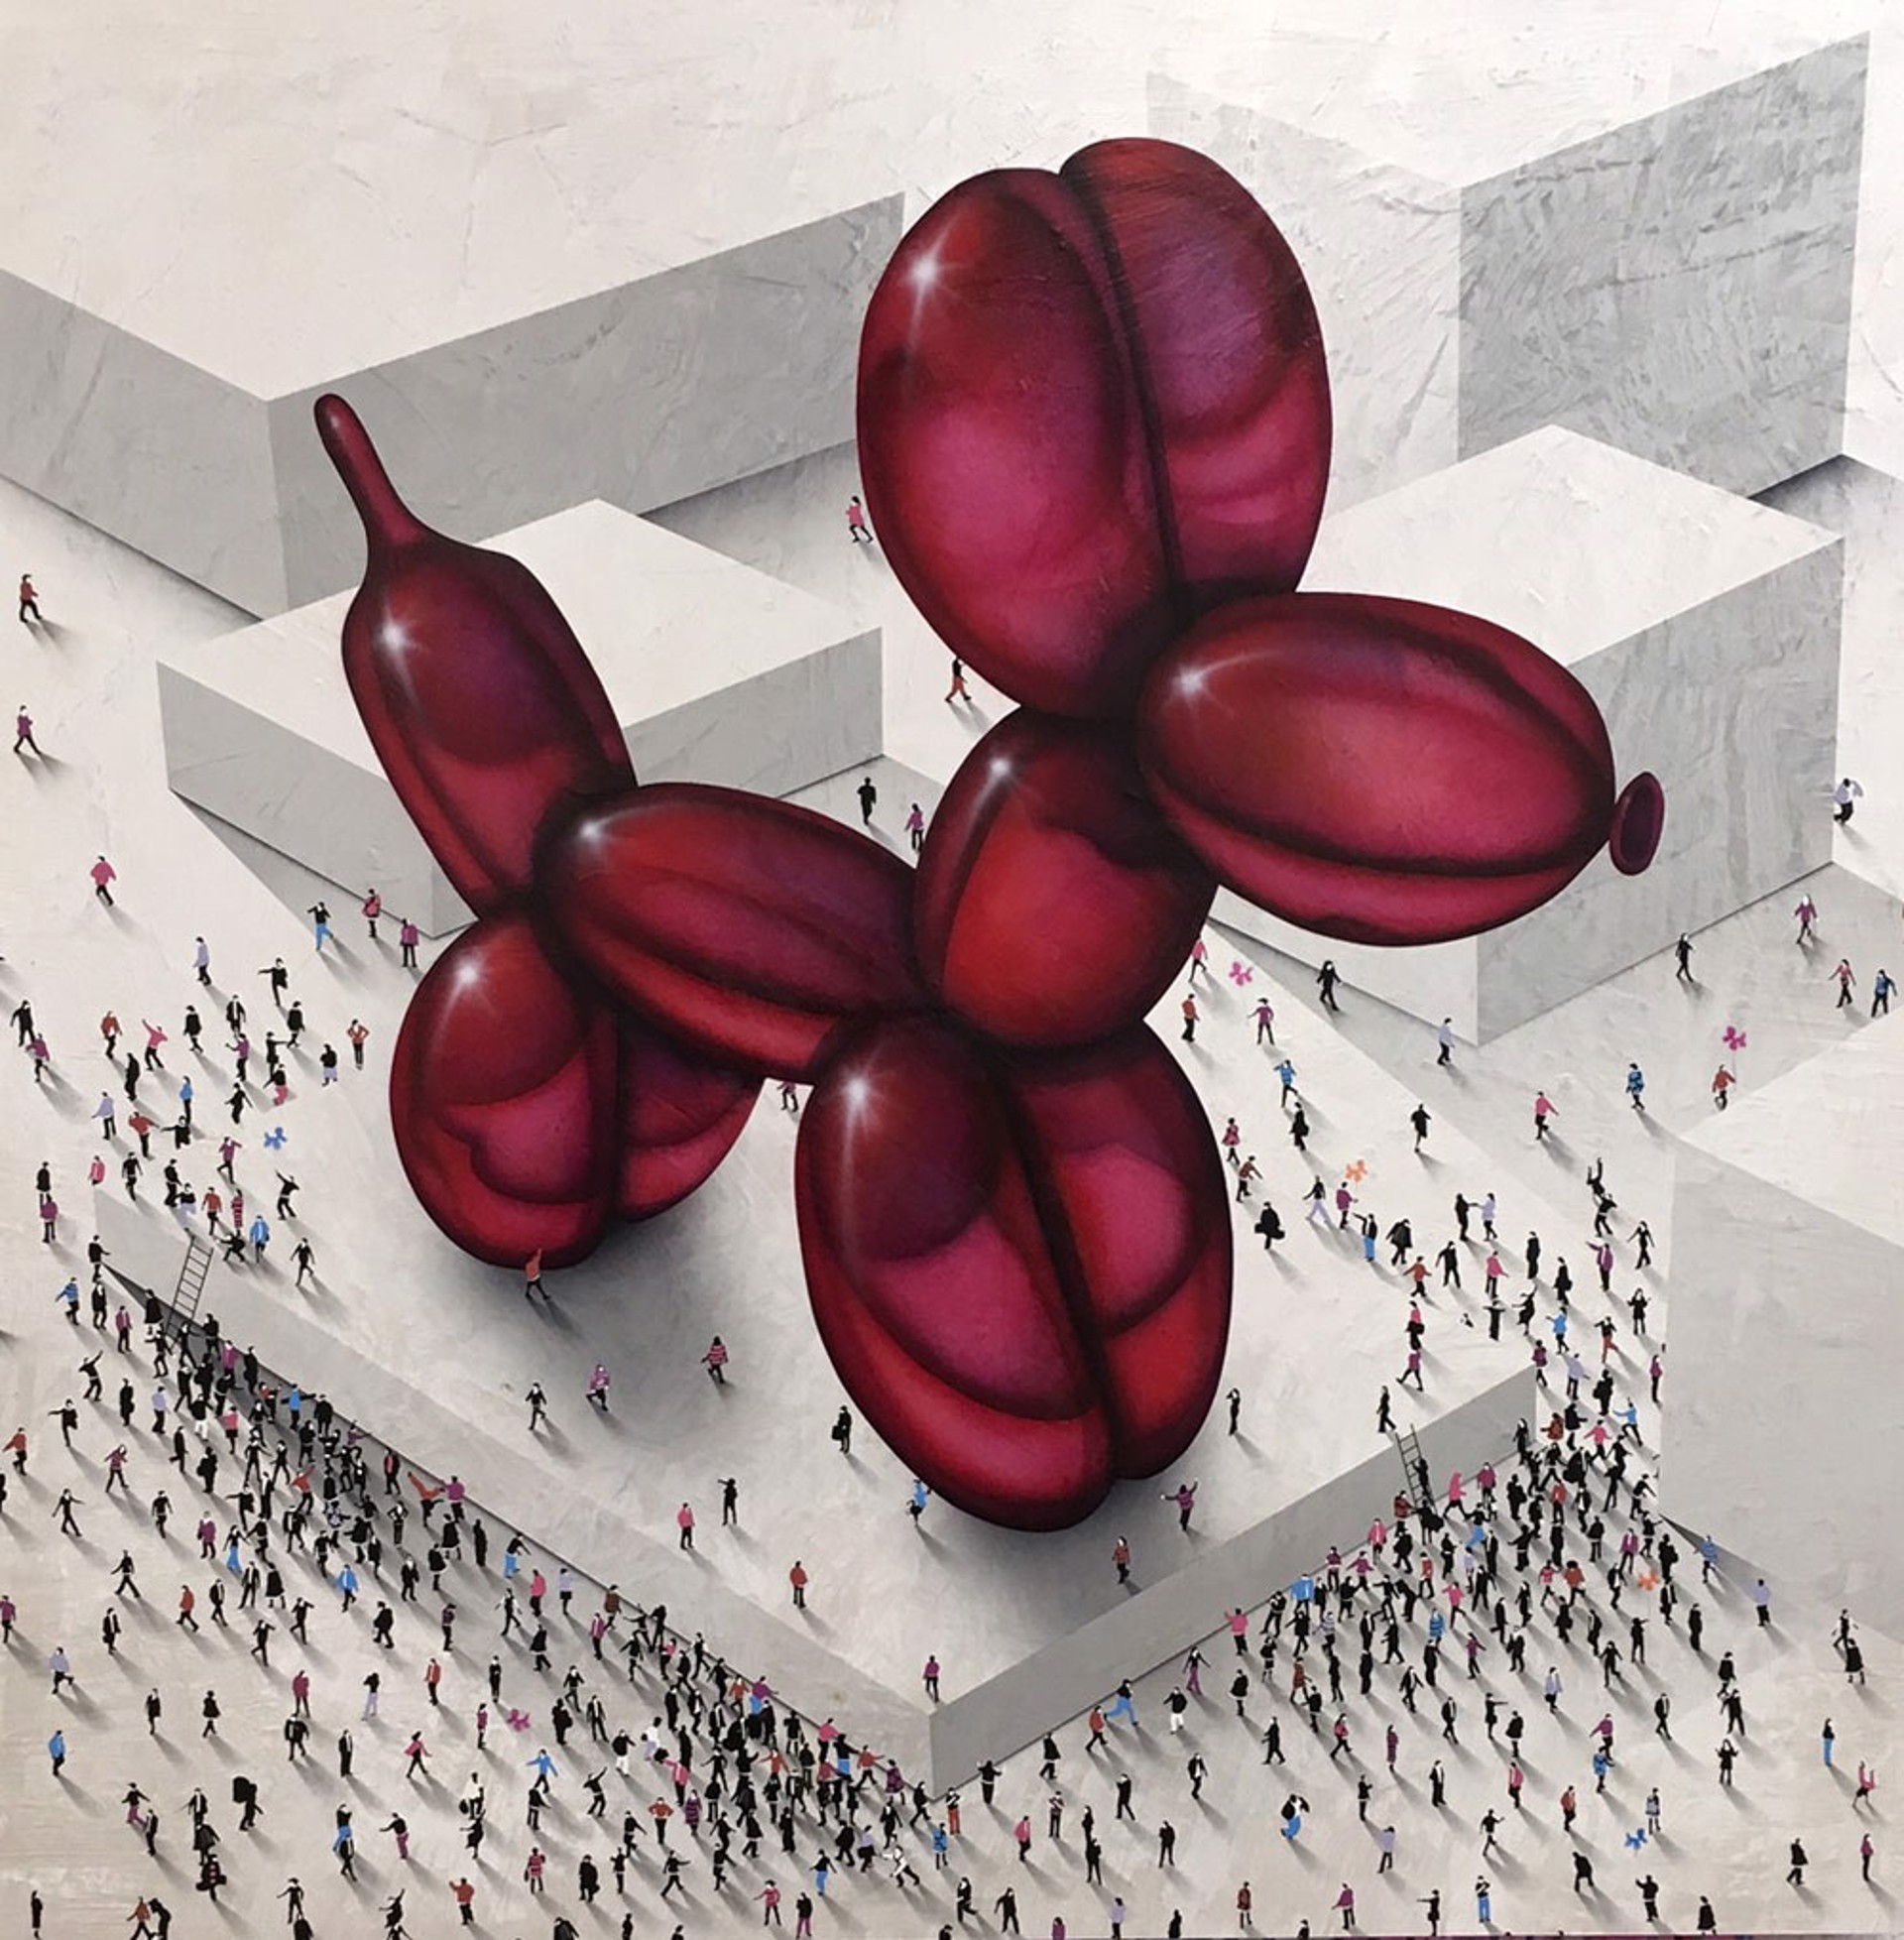 Balloon Dog Square (Underdog) by Craig Alan, Populus Homage